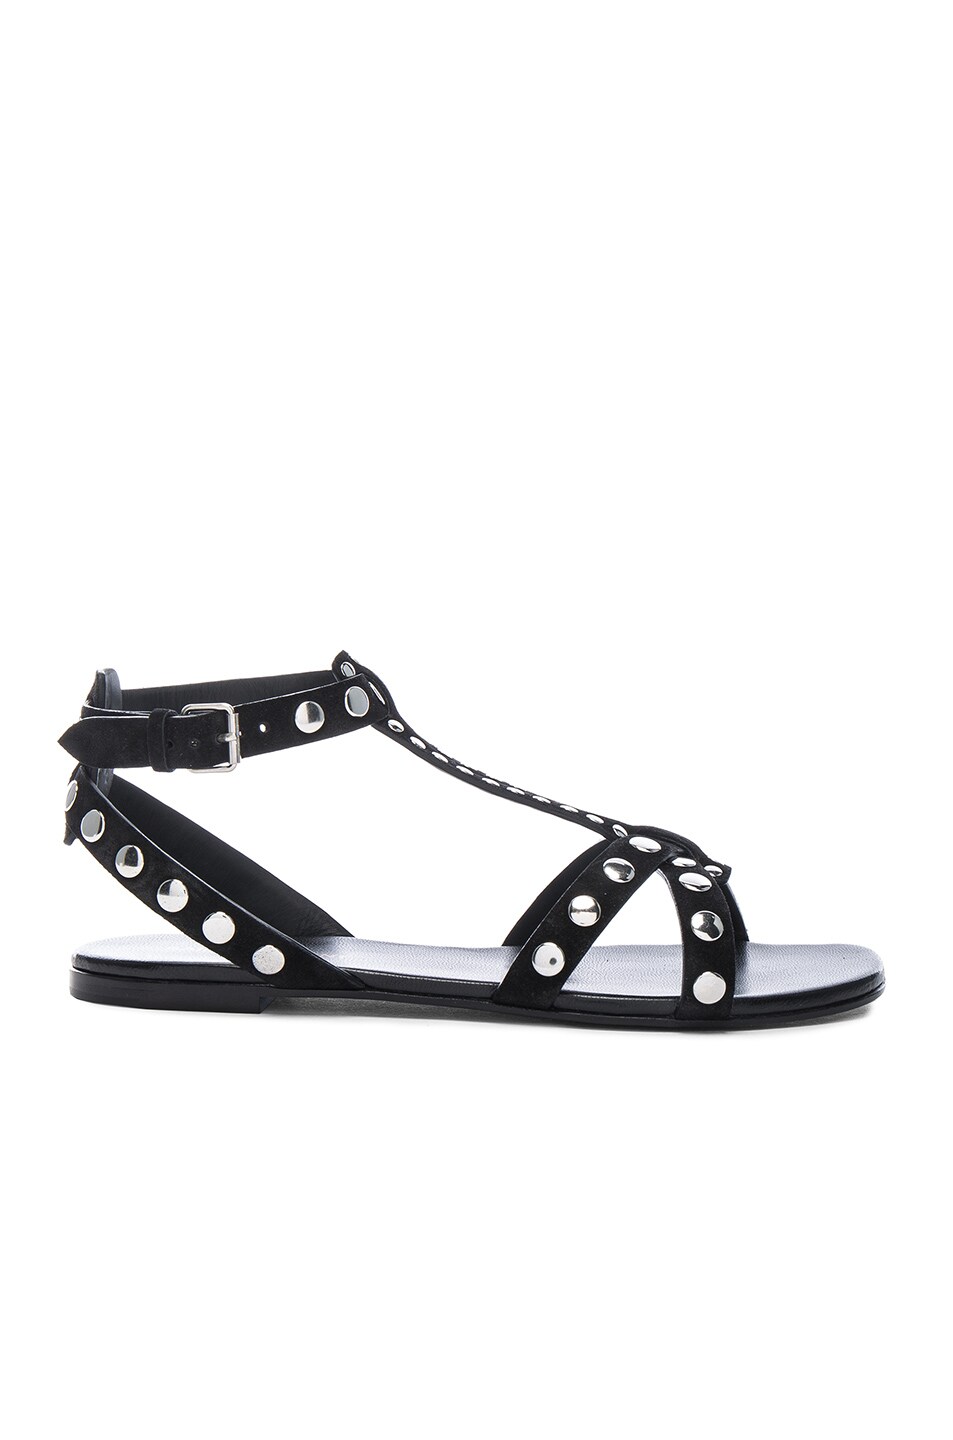 Image 1 of Saint Laurent Nu Pieds Studded Suede Sandals in Black